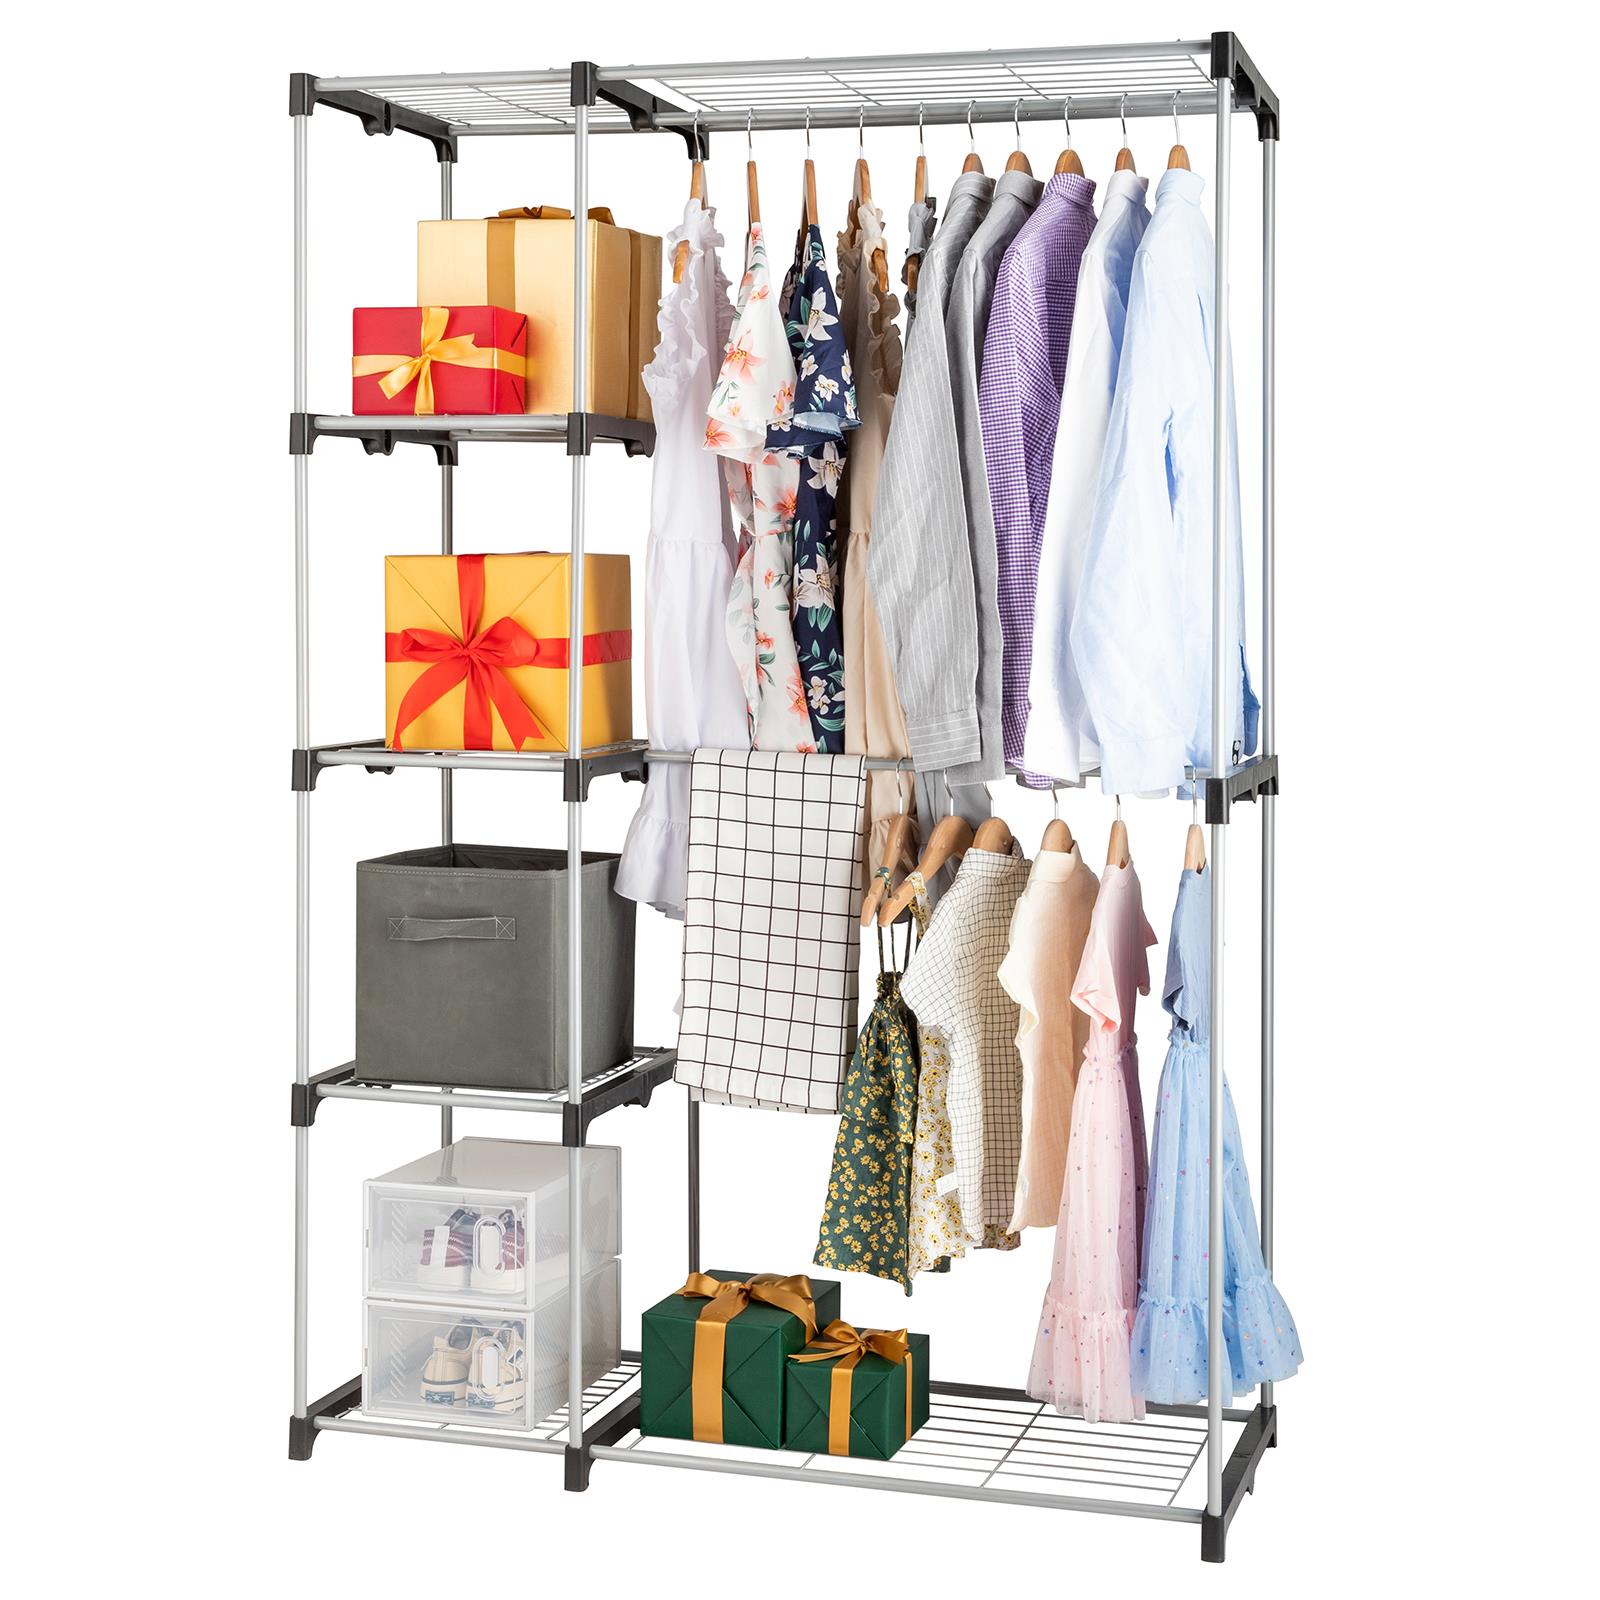 Zimtown Silver Portable Closet Organizer Storage Clothes Hanger Garment Shelf Rail Rack - image 4 of 13